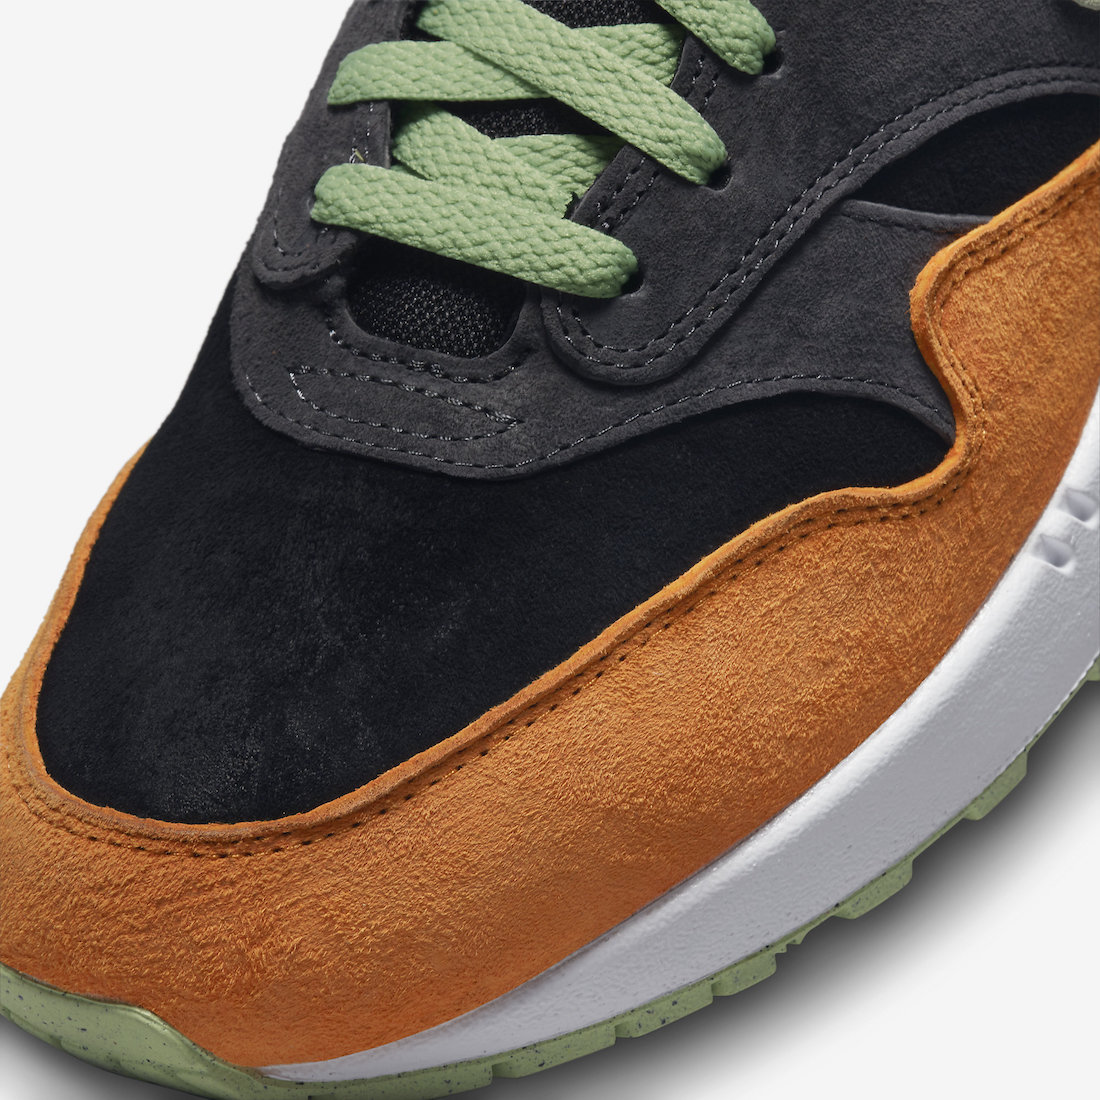 Nike Air Max 1 Ugly Duckling Anthracite Honeydew Black Kumquat DZ0482-001 Release Date